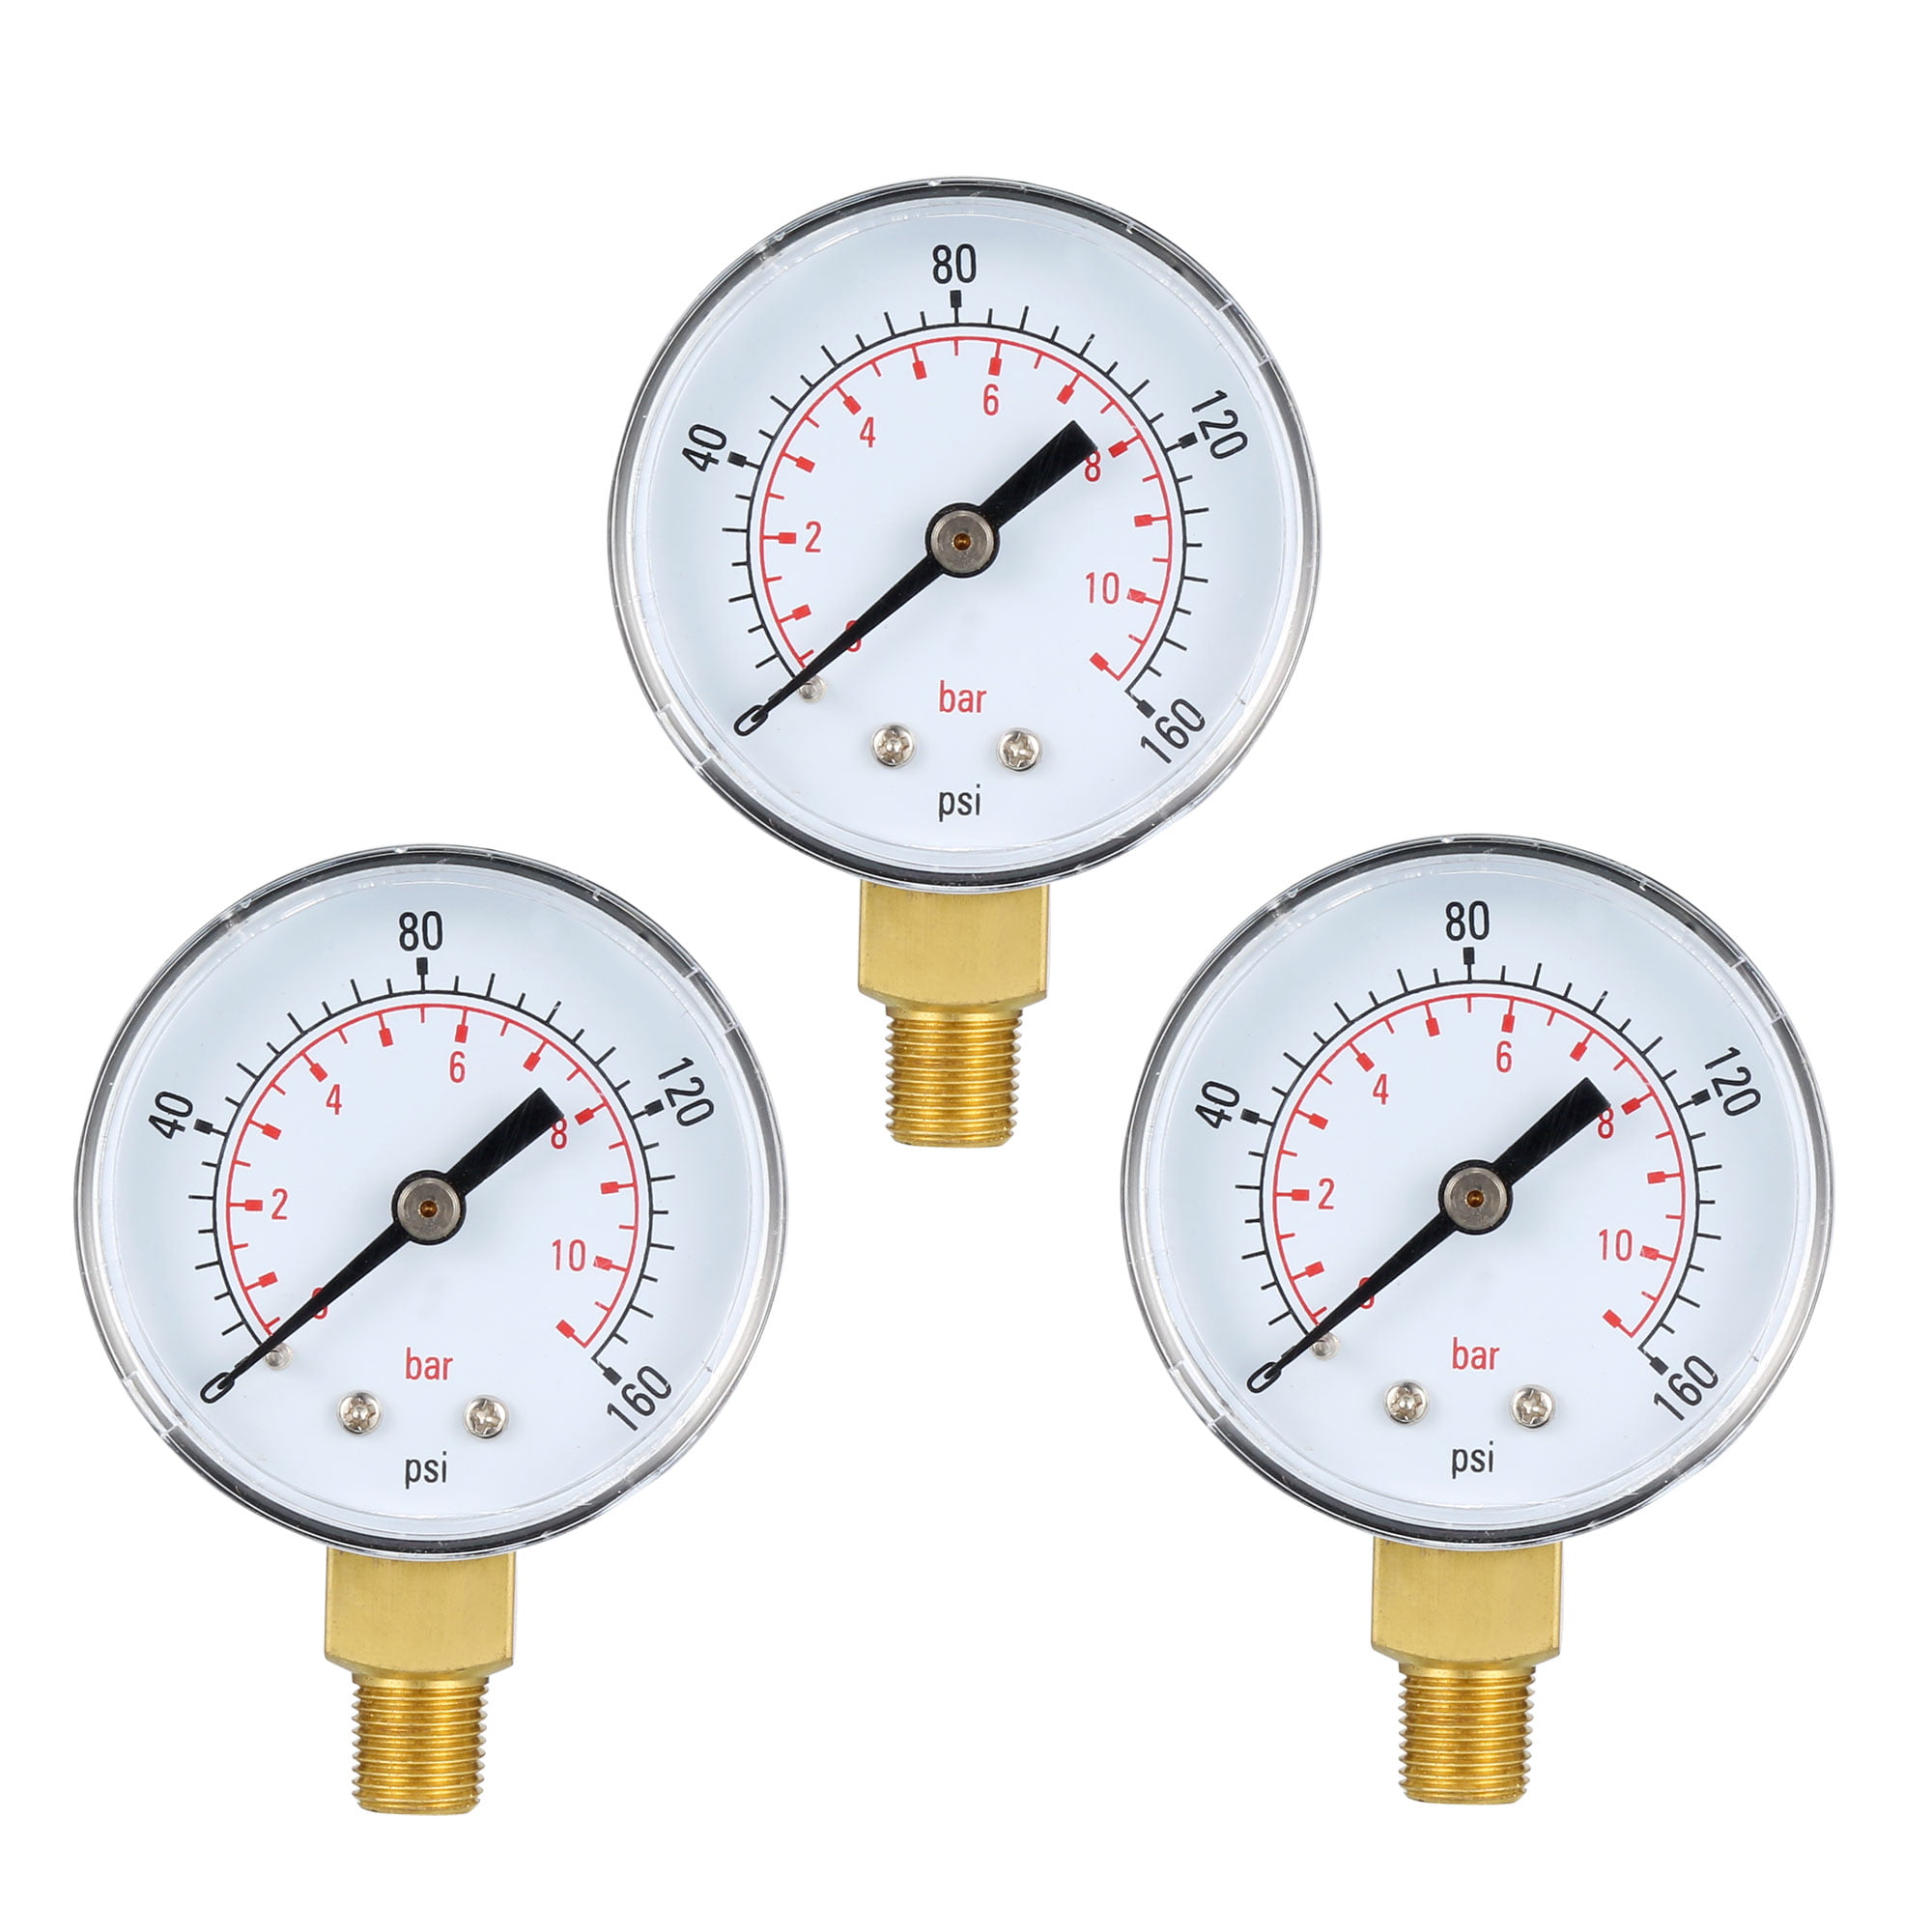 Pressure Gauge Pressure Gauge 1/8NPT Mini Pressure Gauge for Water Fuel Oil air 0-160 psi/0-10 bar NPT Thread 1/8 inch 